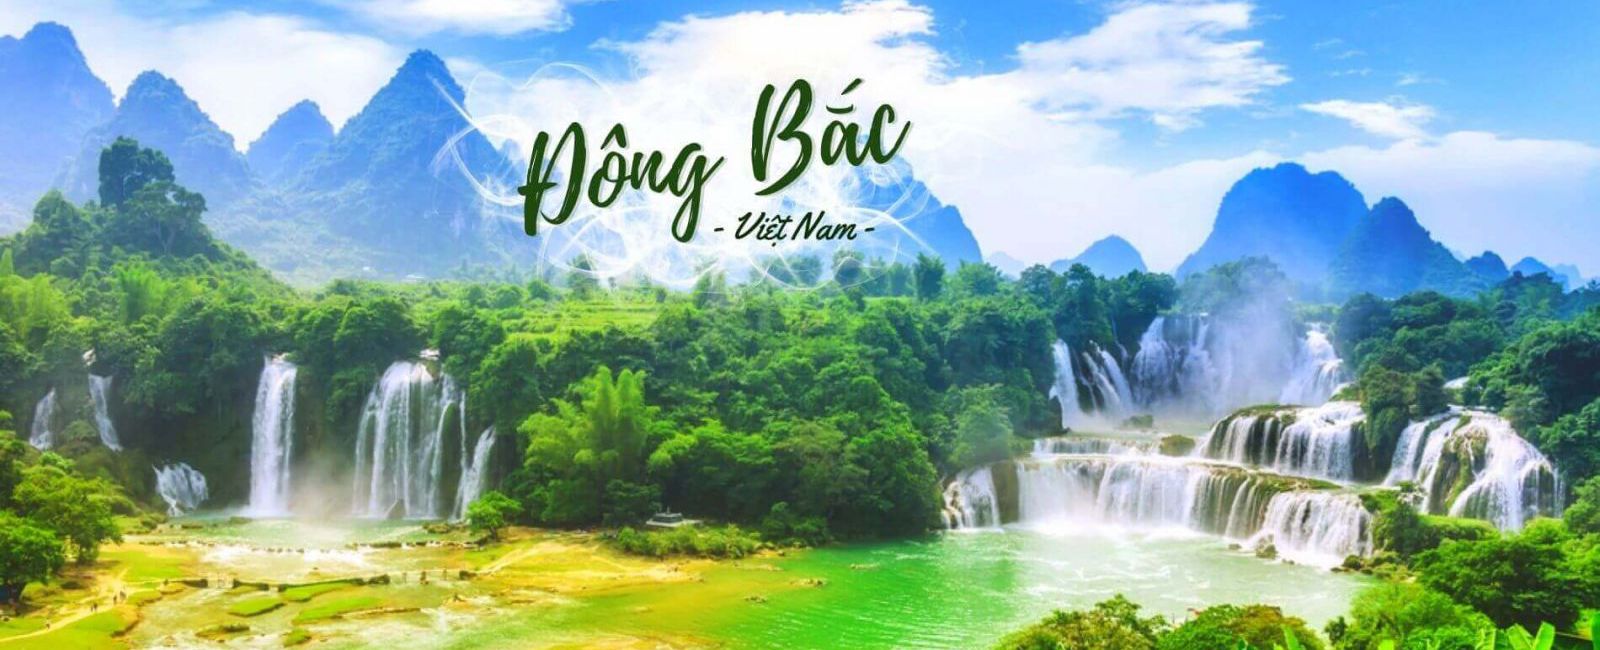 Dong Bac Vietnam